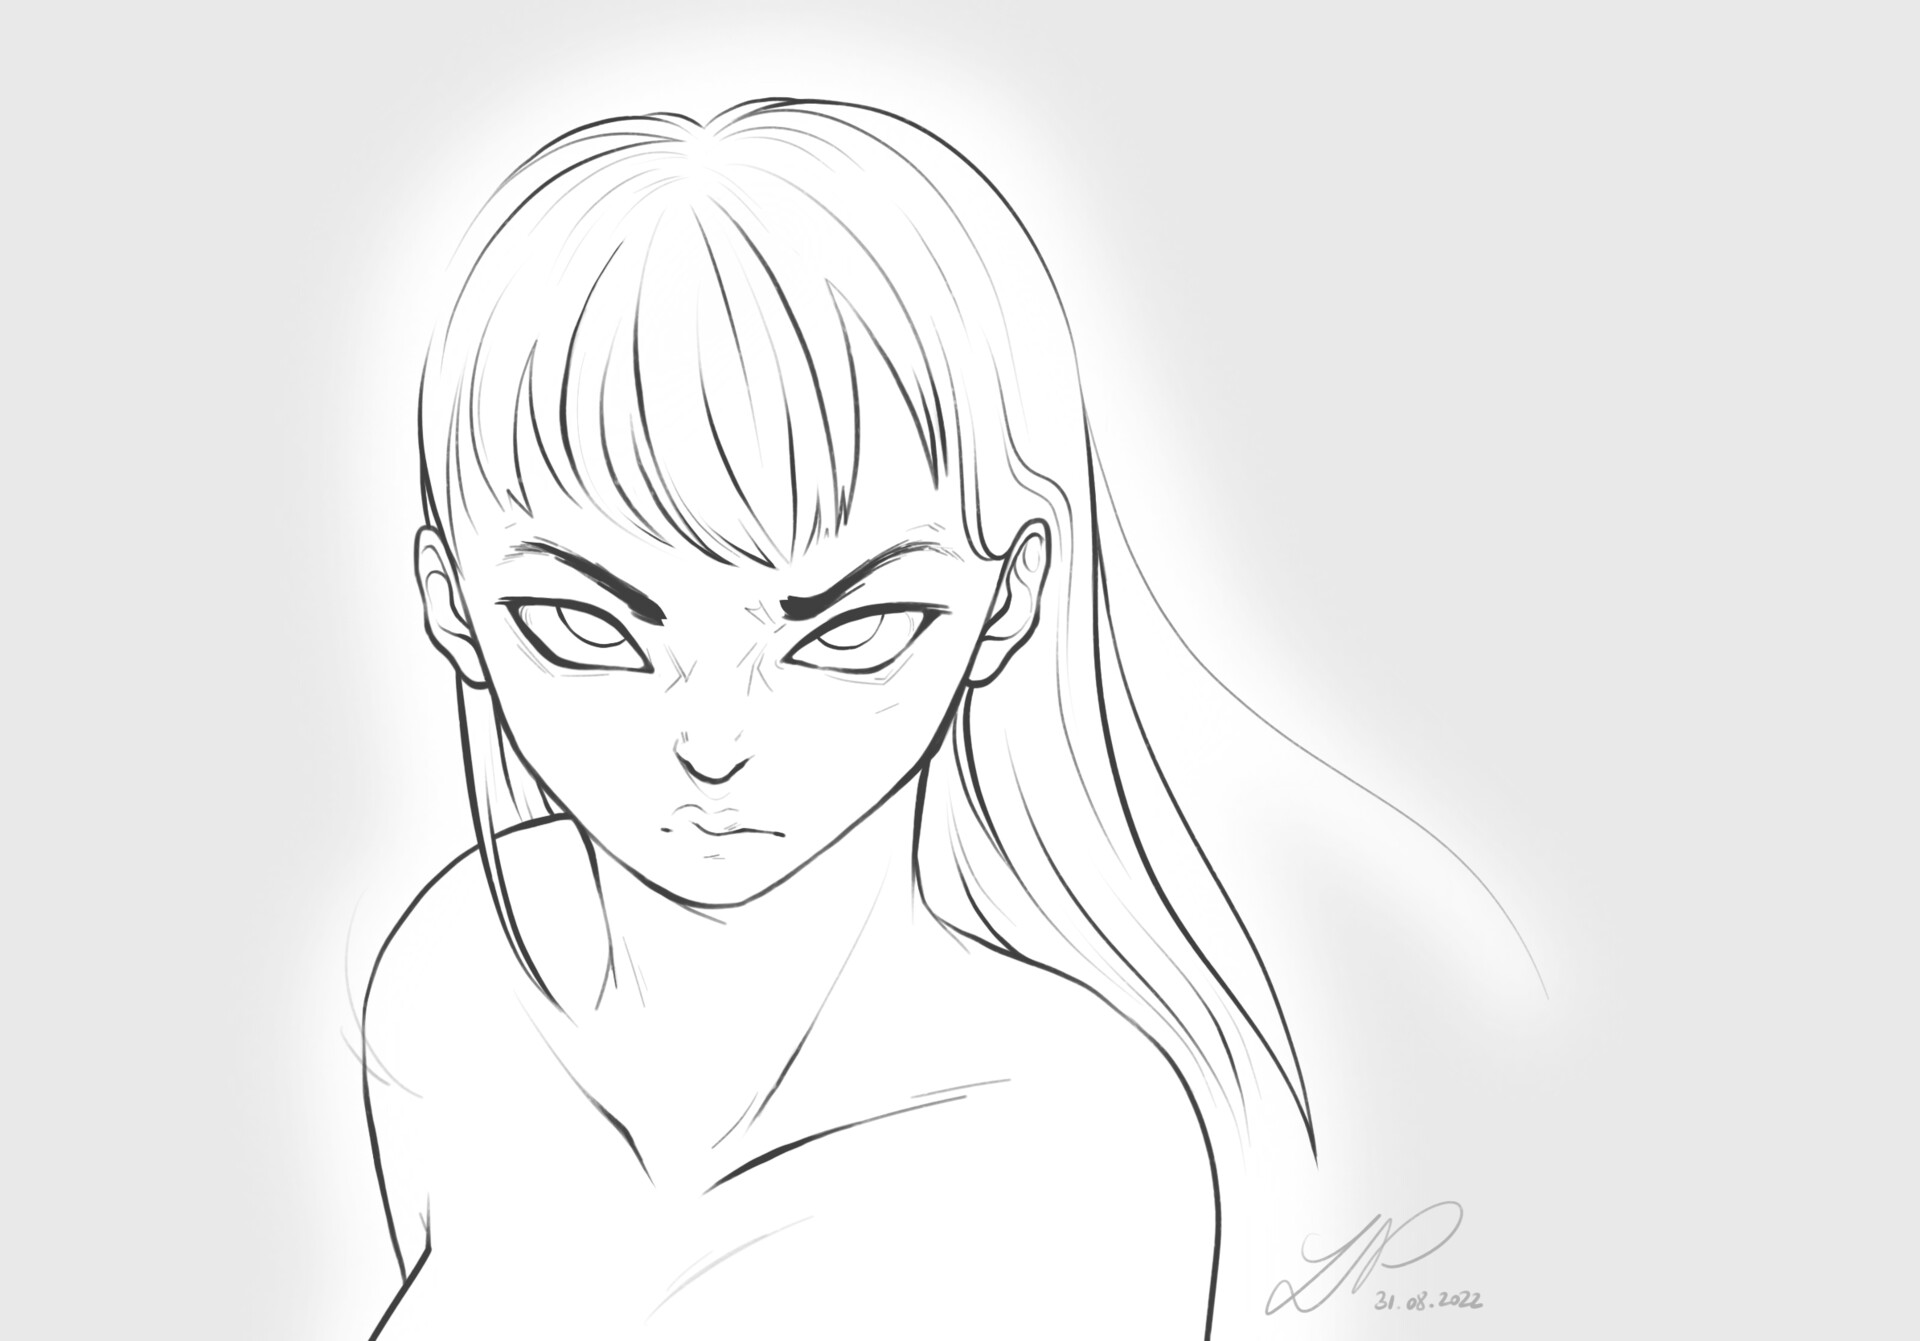 ArtStation - Angry Girl Sketch